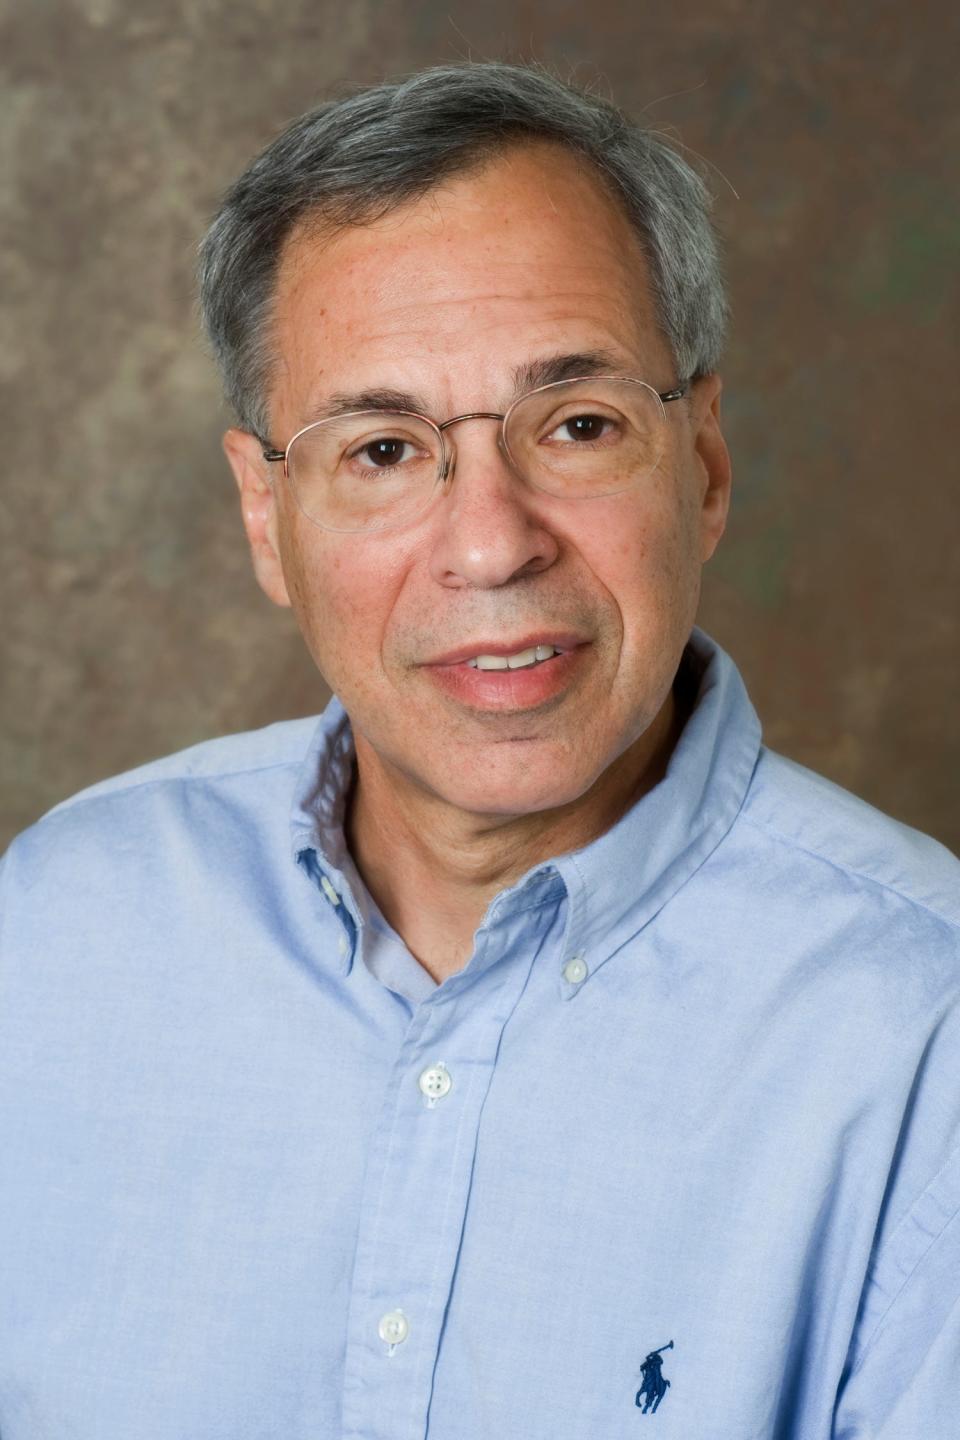 Laurence Seidman is a professor of economics at the University of Delaware